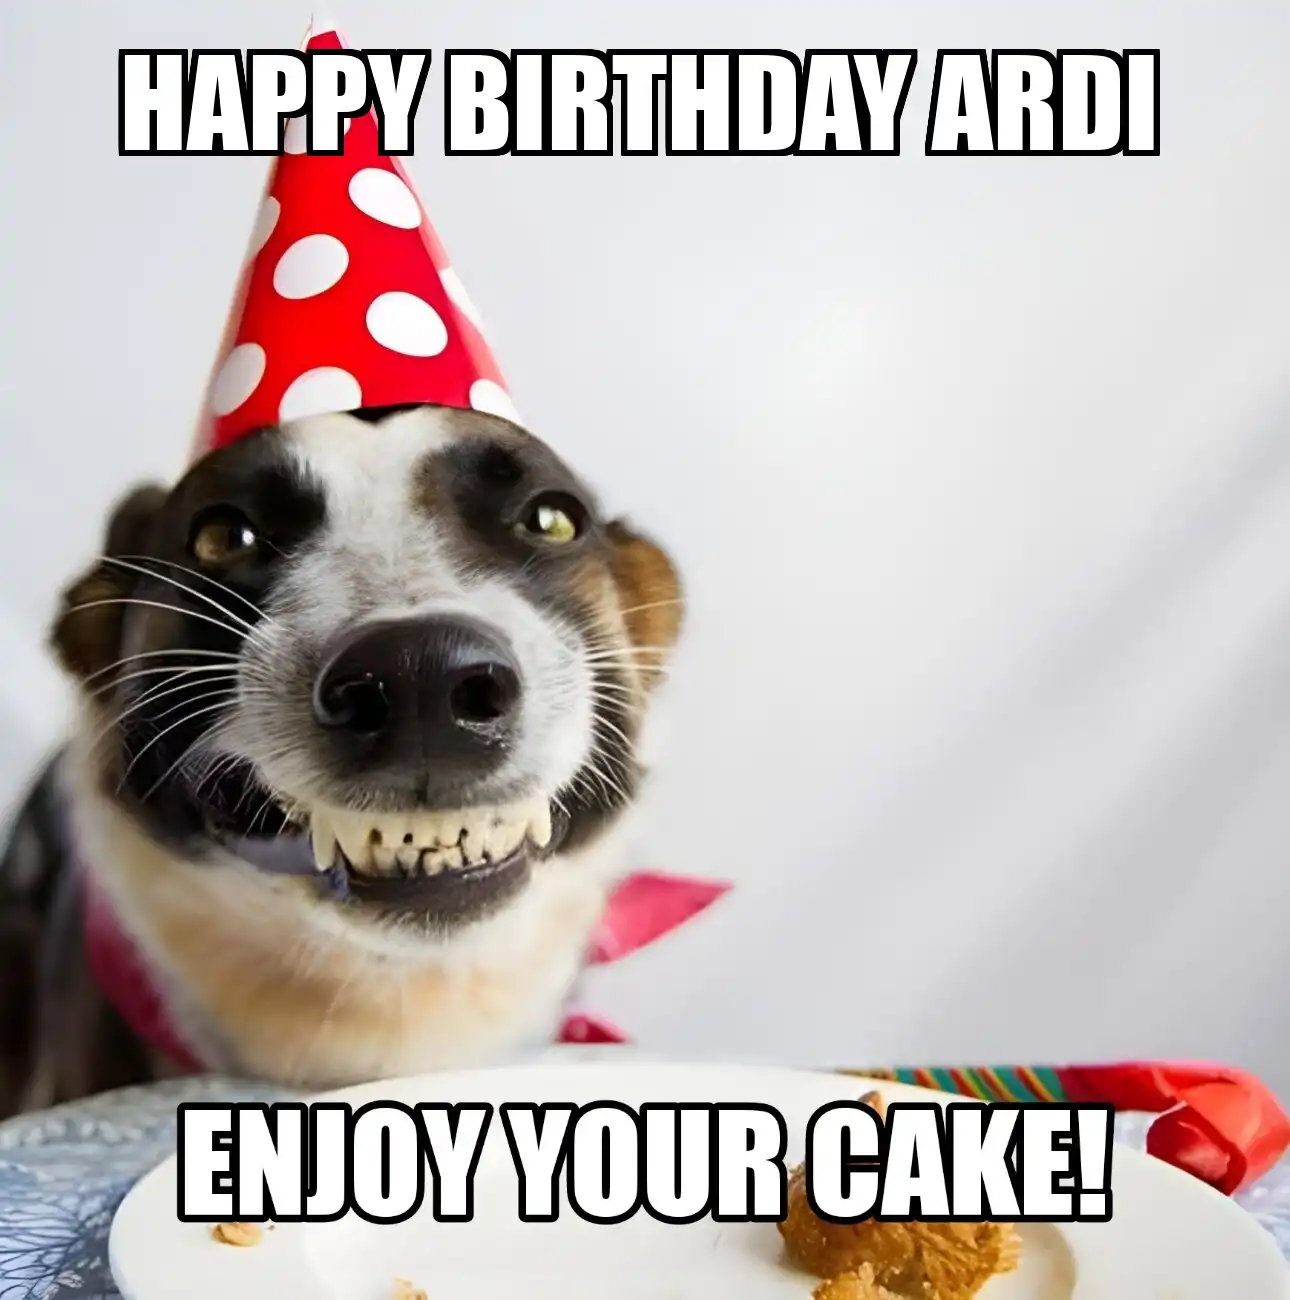 Happy Birthday Ardi Enjoy Your Cake Dog Meme